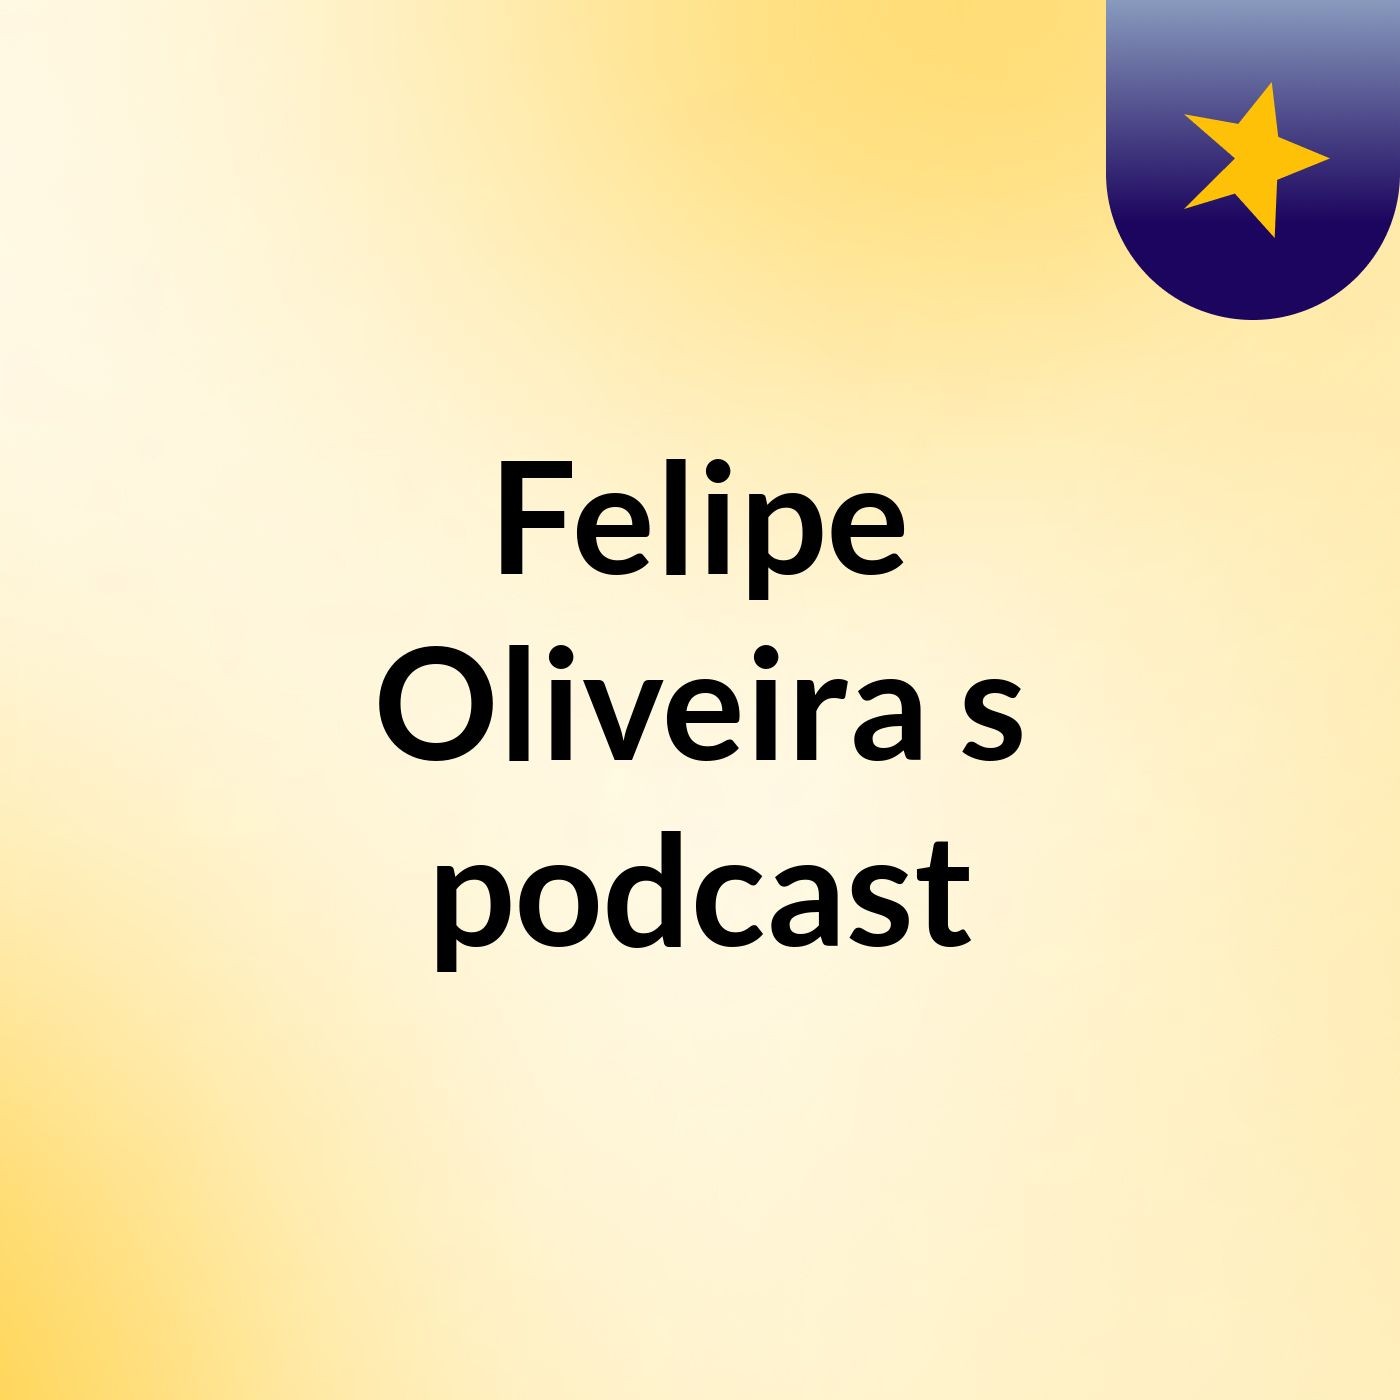 Felipe Oliveira's podcast